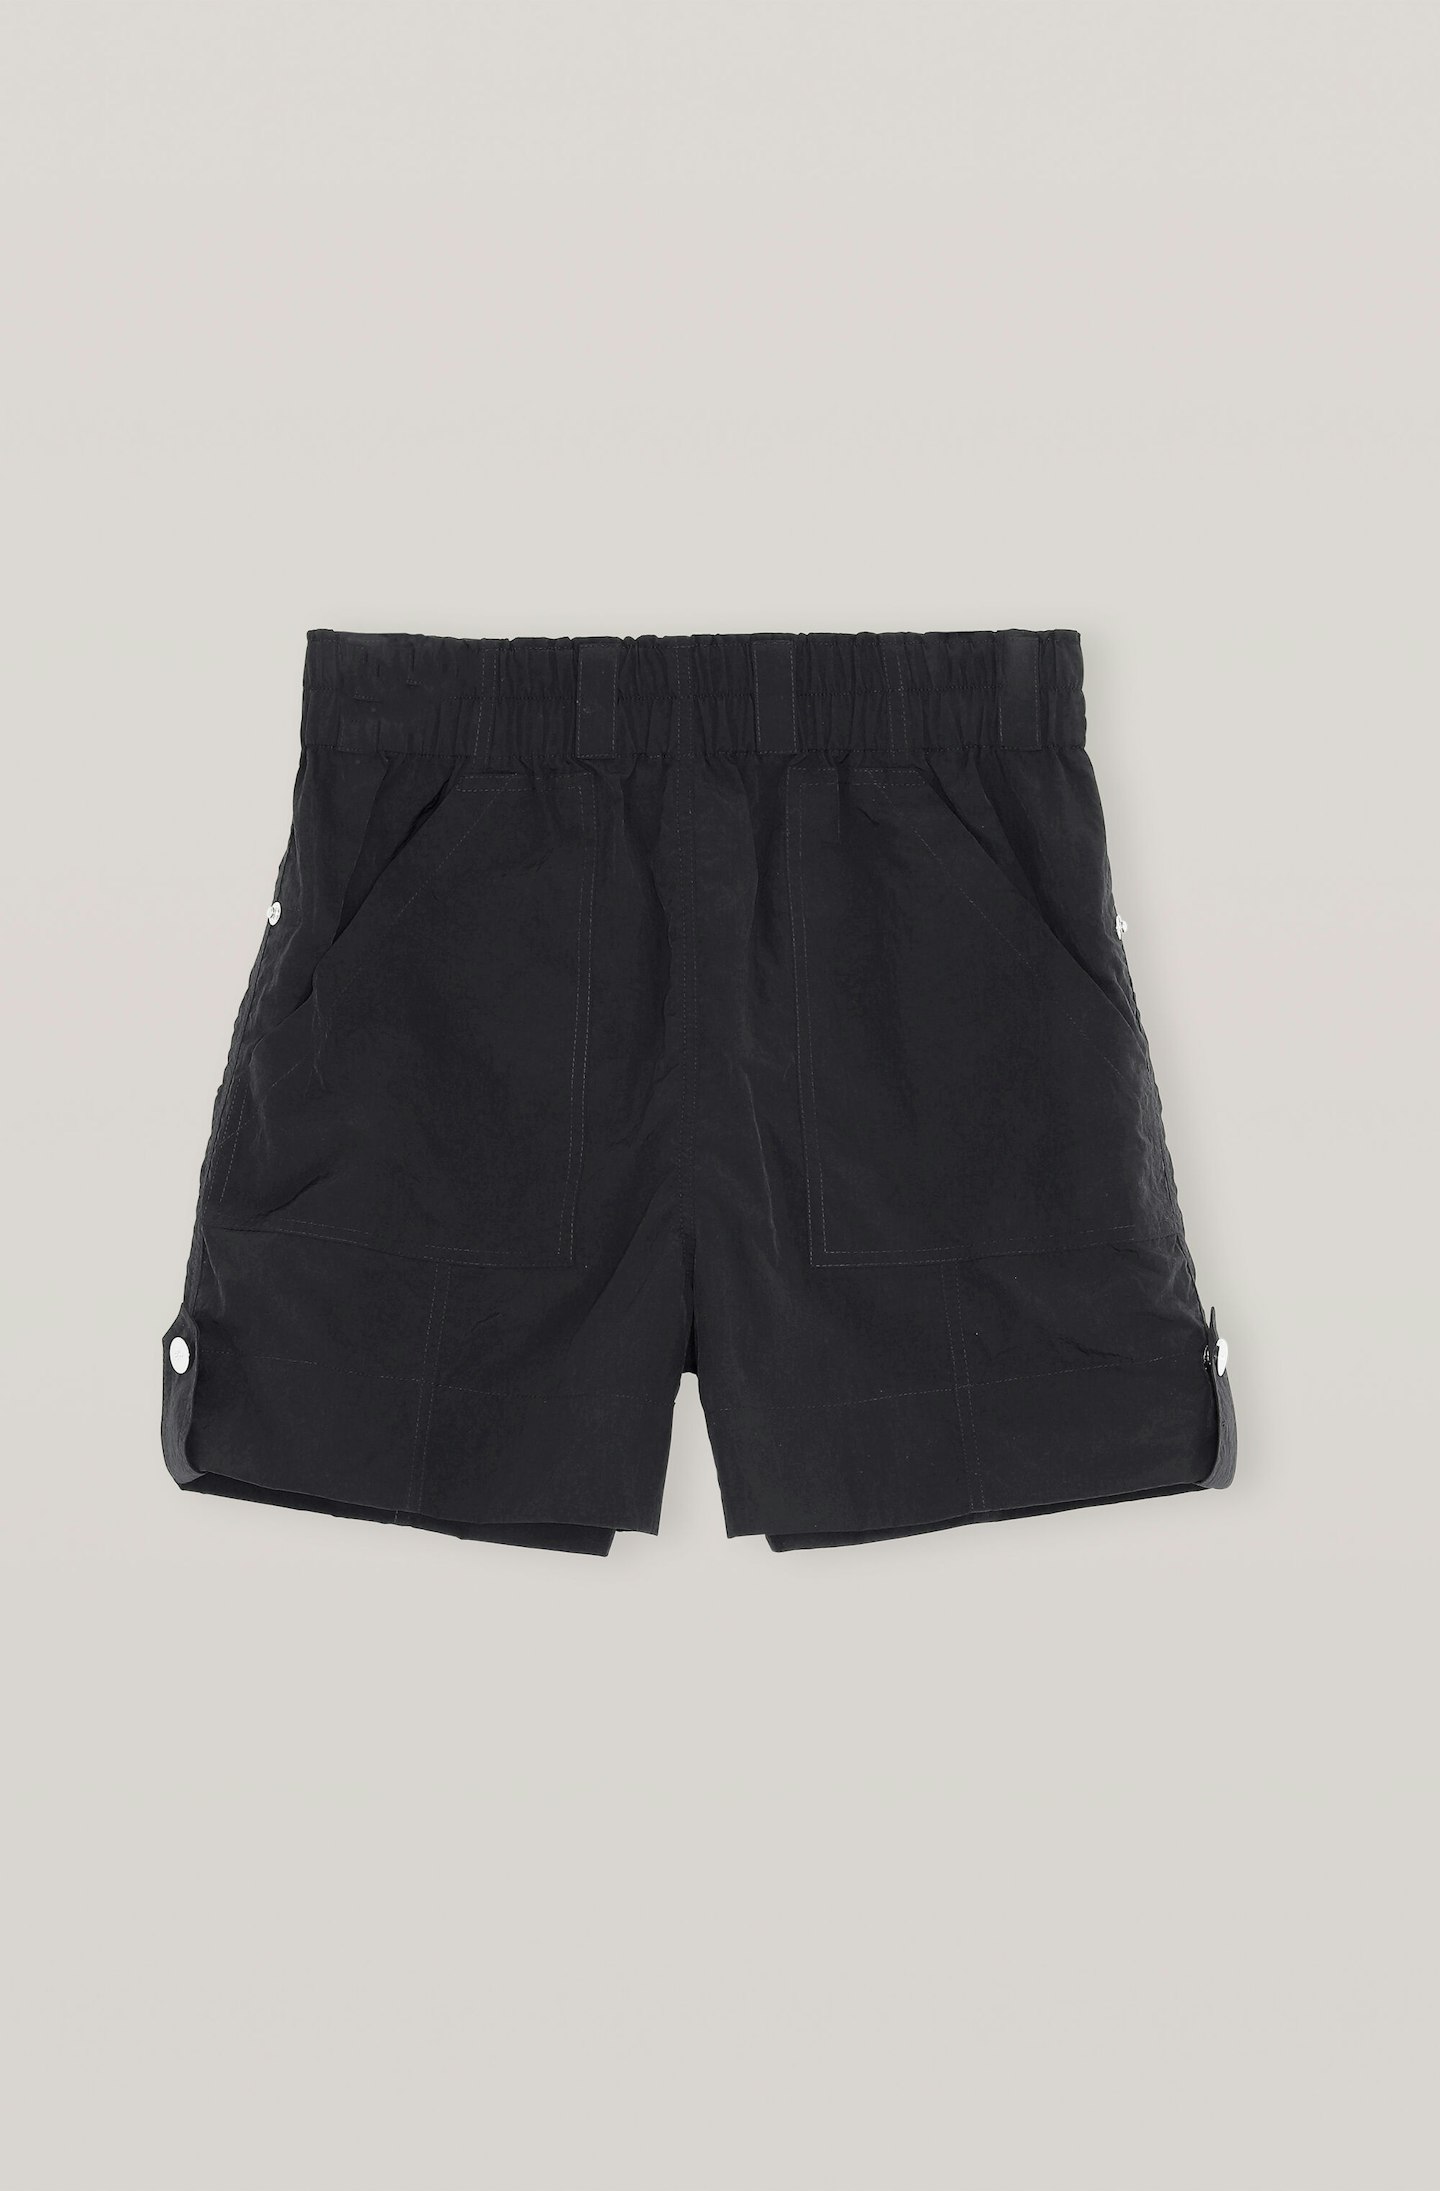 Ganni, Crinkled Tech Shorts, £115